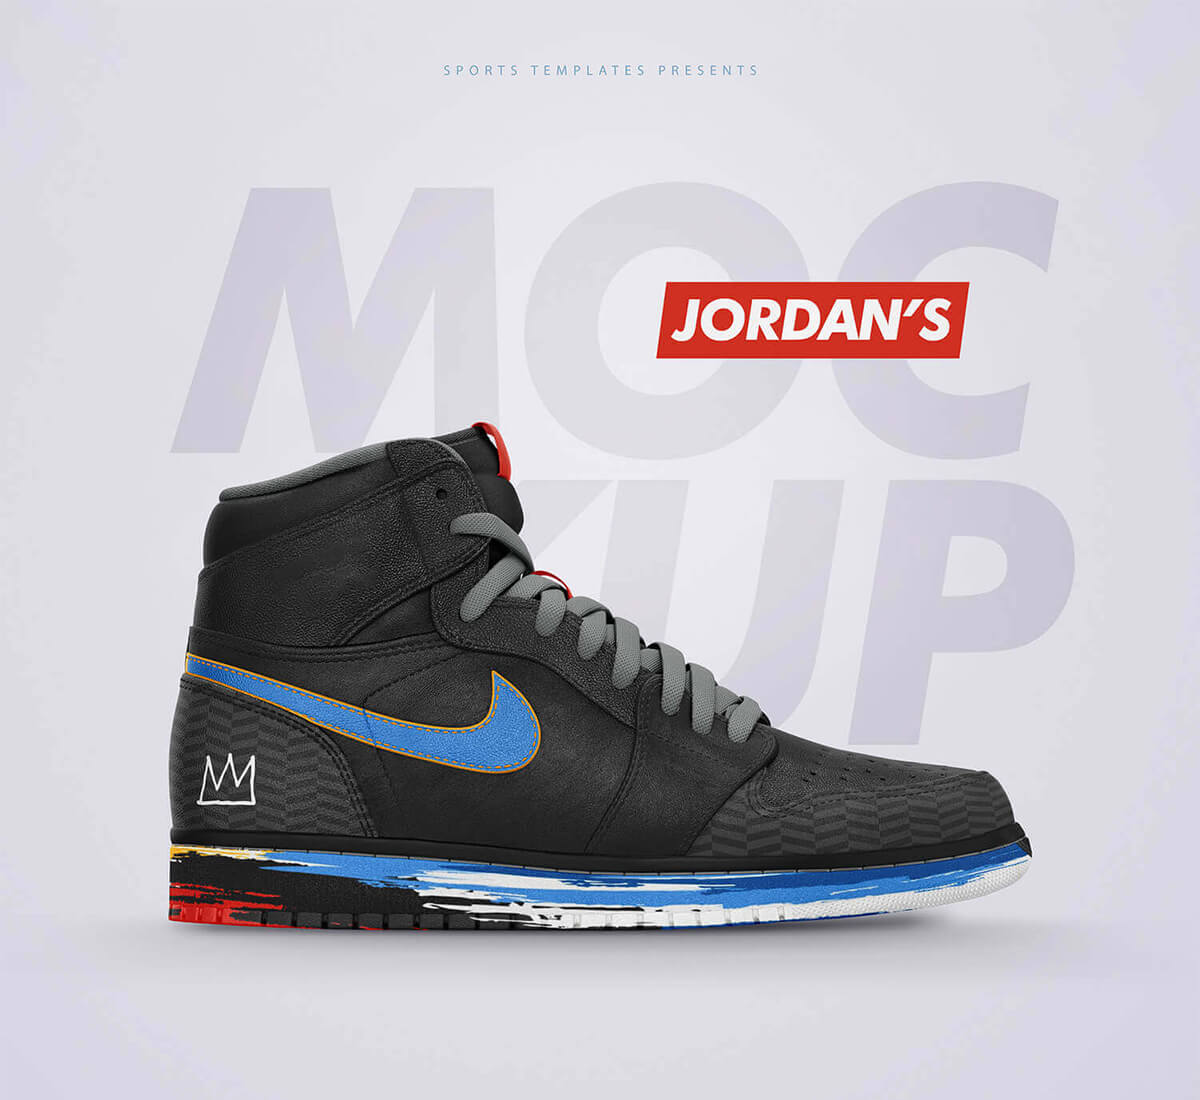 mint-Nike-Air-Jordans-Photoshop-mockup-template